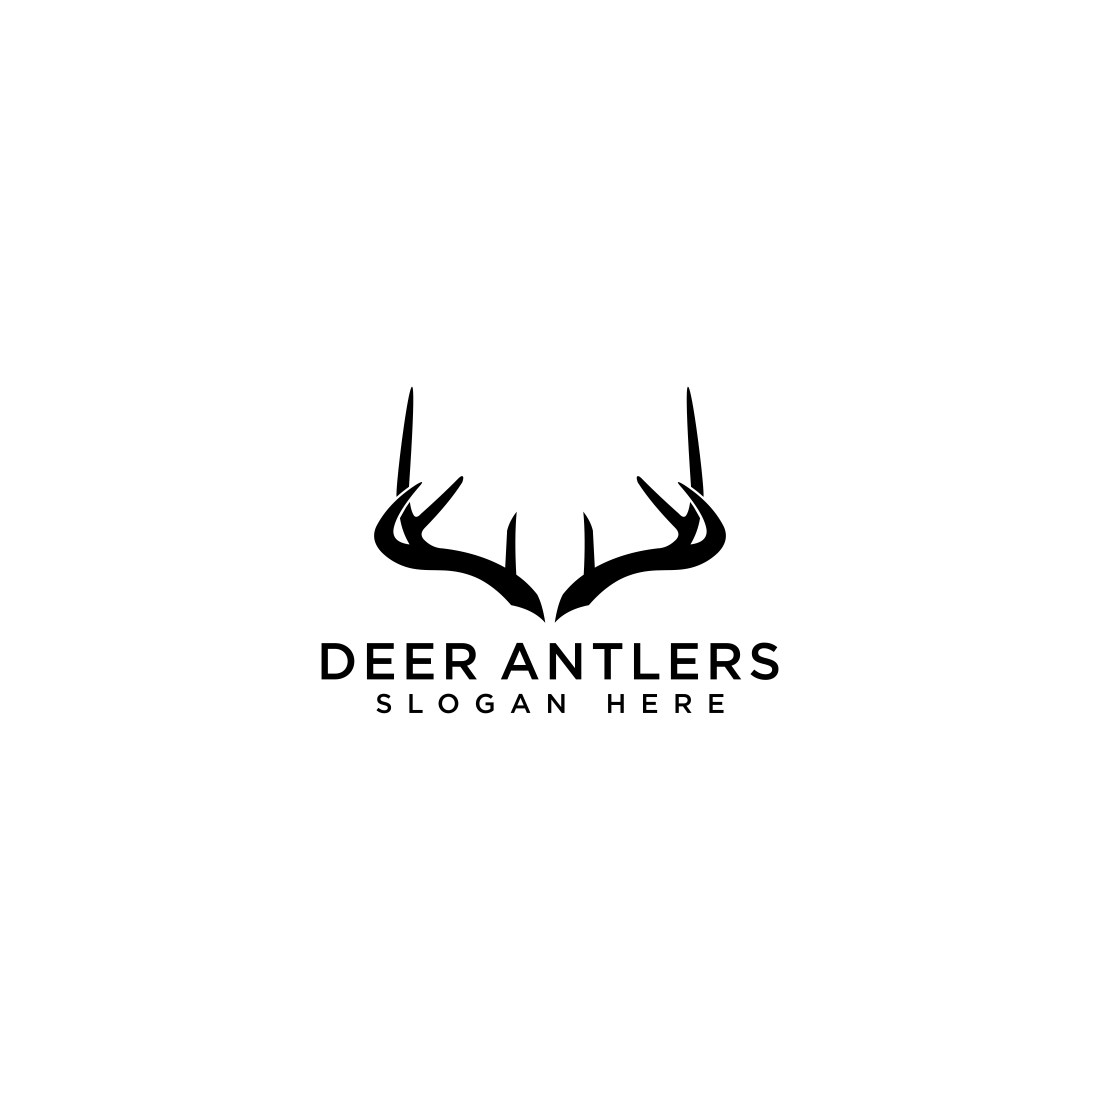 deer antlers vecot design cover image.